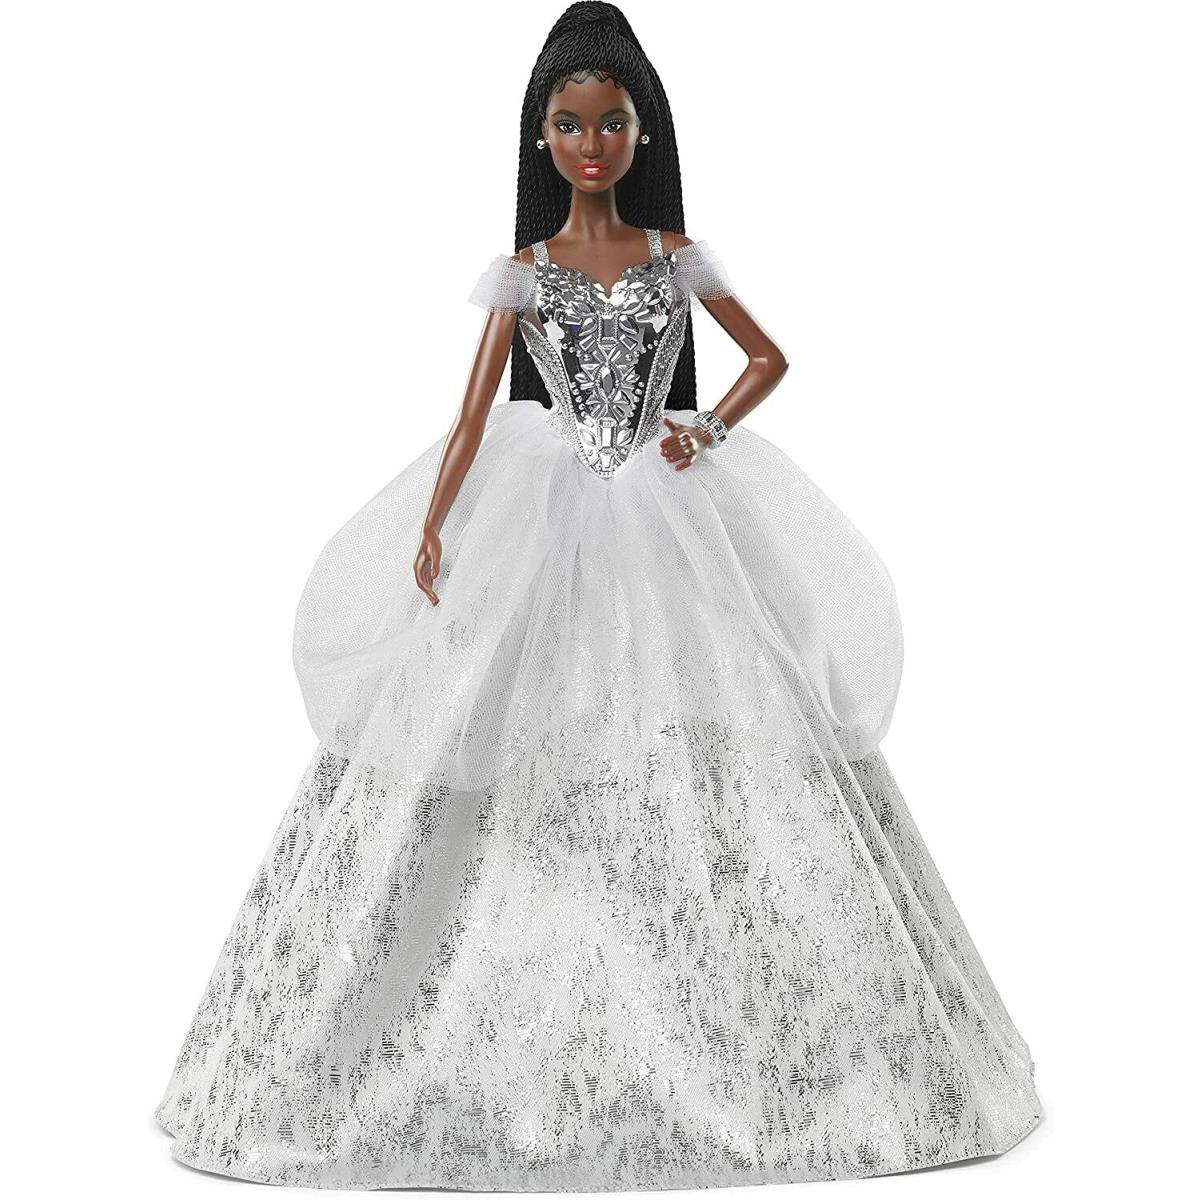 Barbie Signature Holiday Doll 2021 GXL19 Black Hair w/ Braids African American